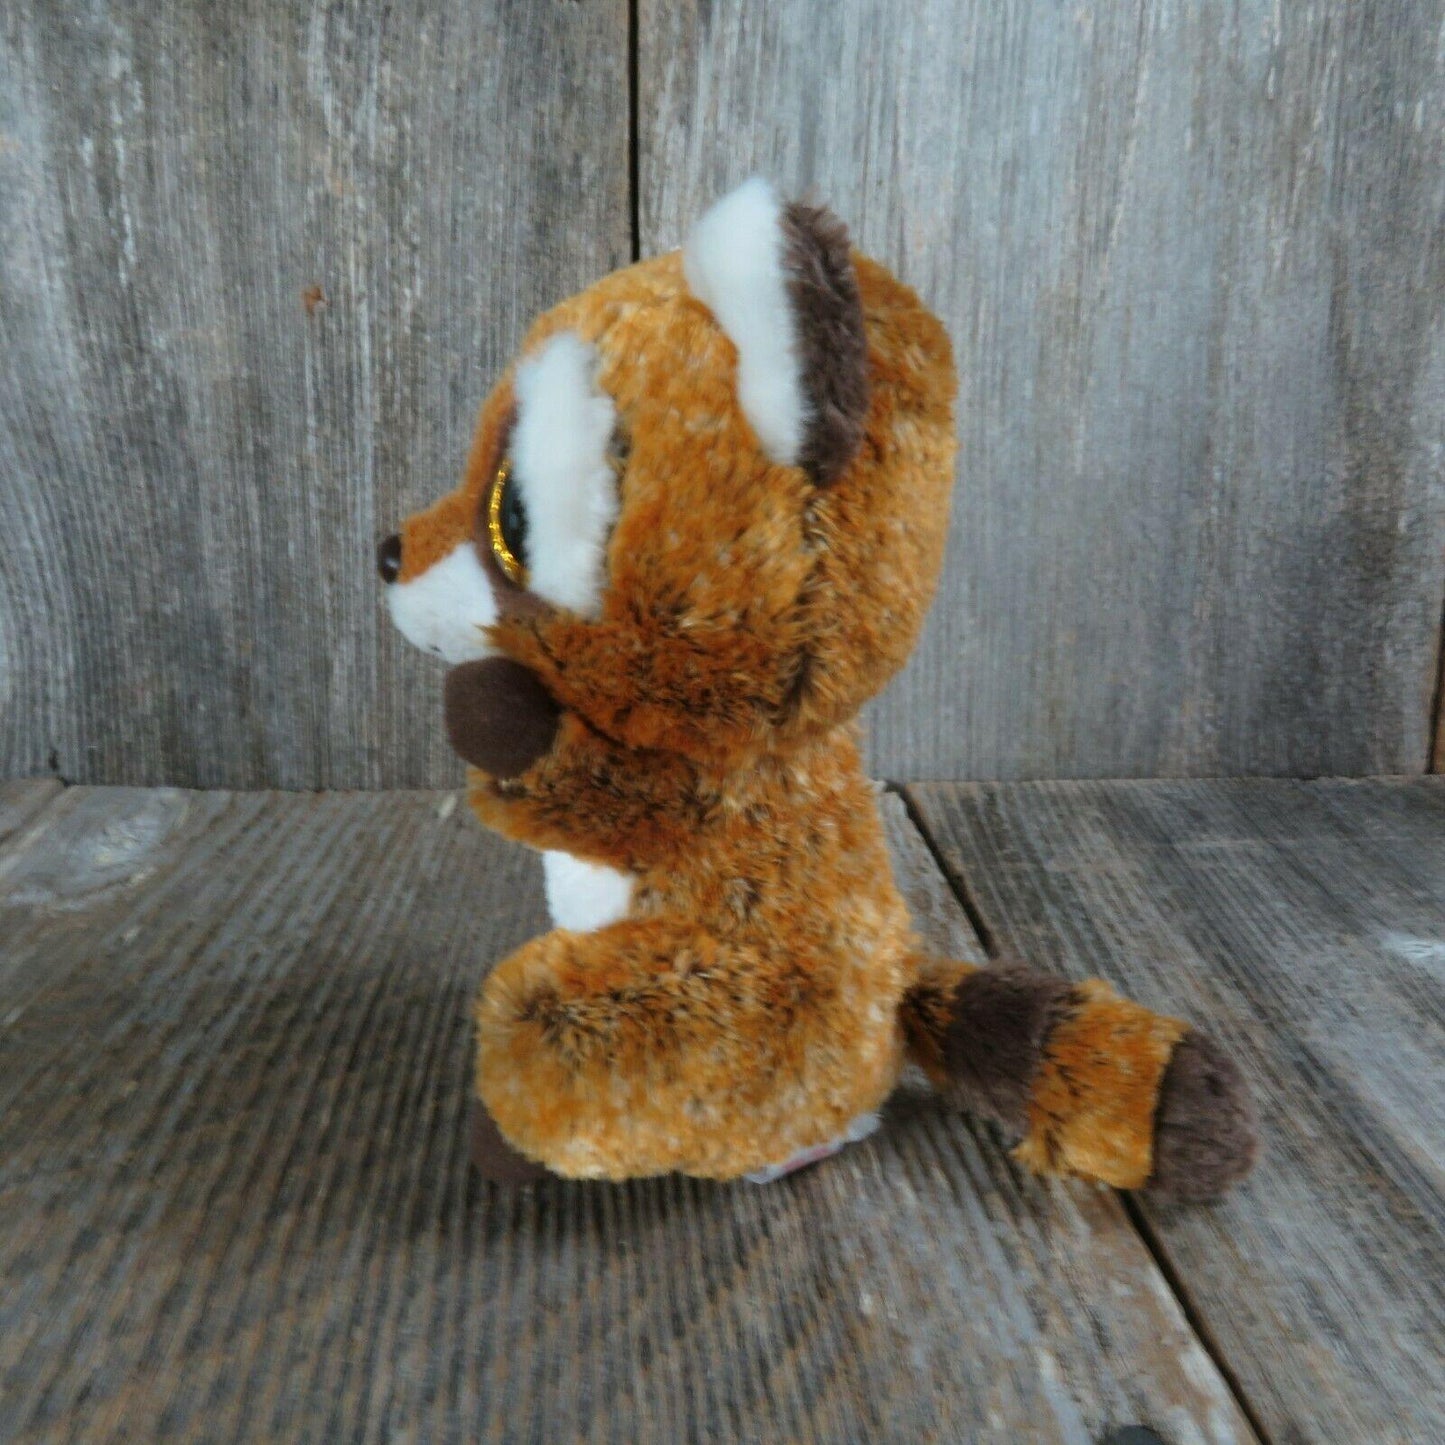 Ty Beanie Boos Rusty The Raccoon Plush Stuffed Animal Kids Gift Toy Boys Girls